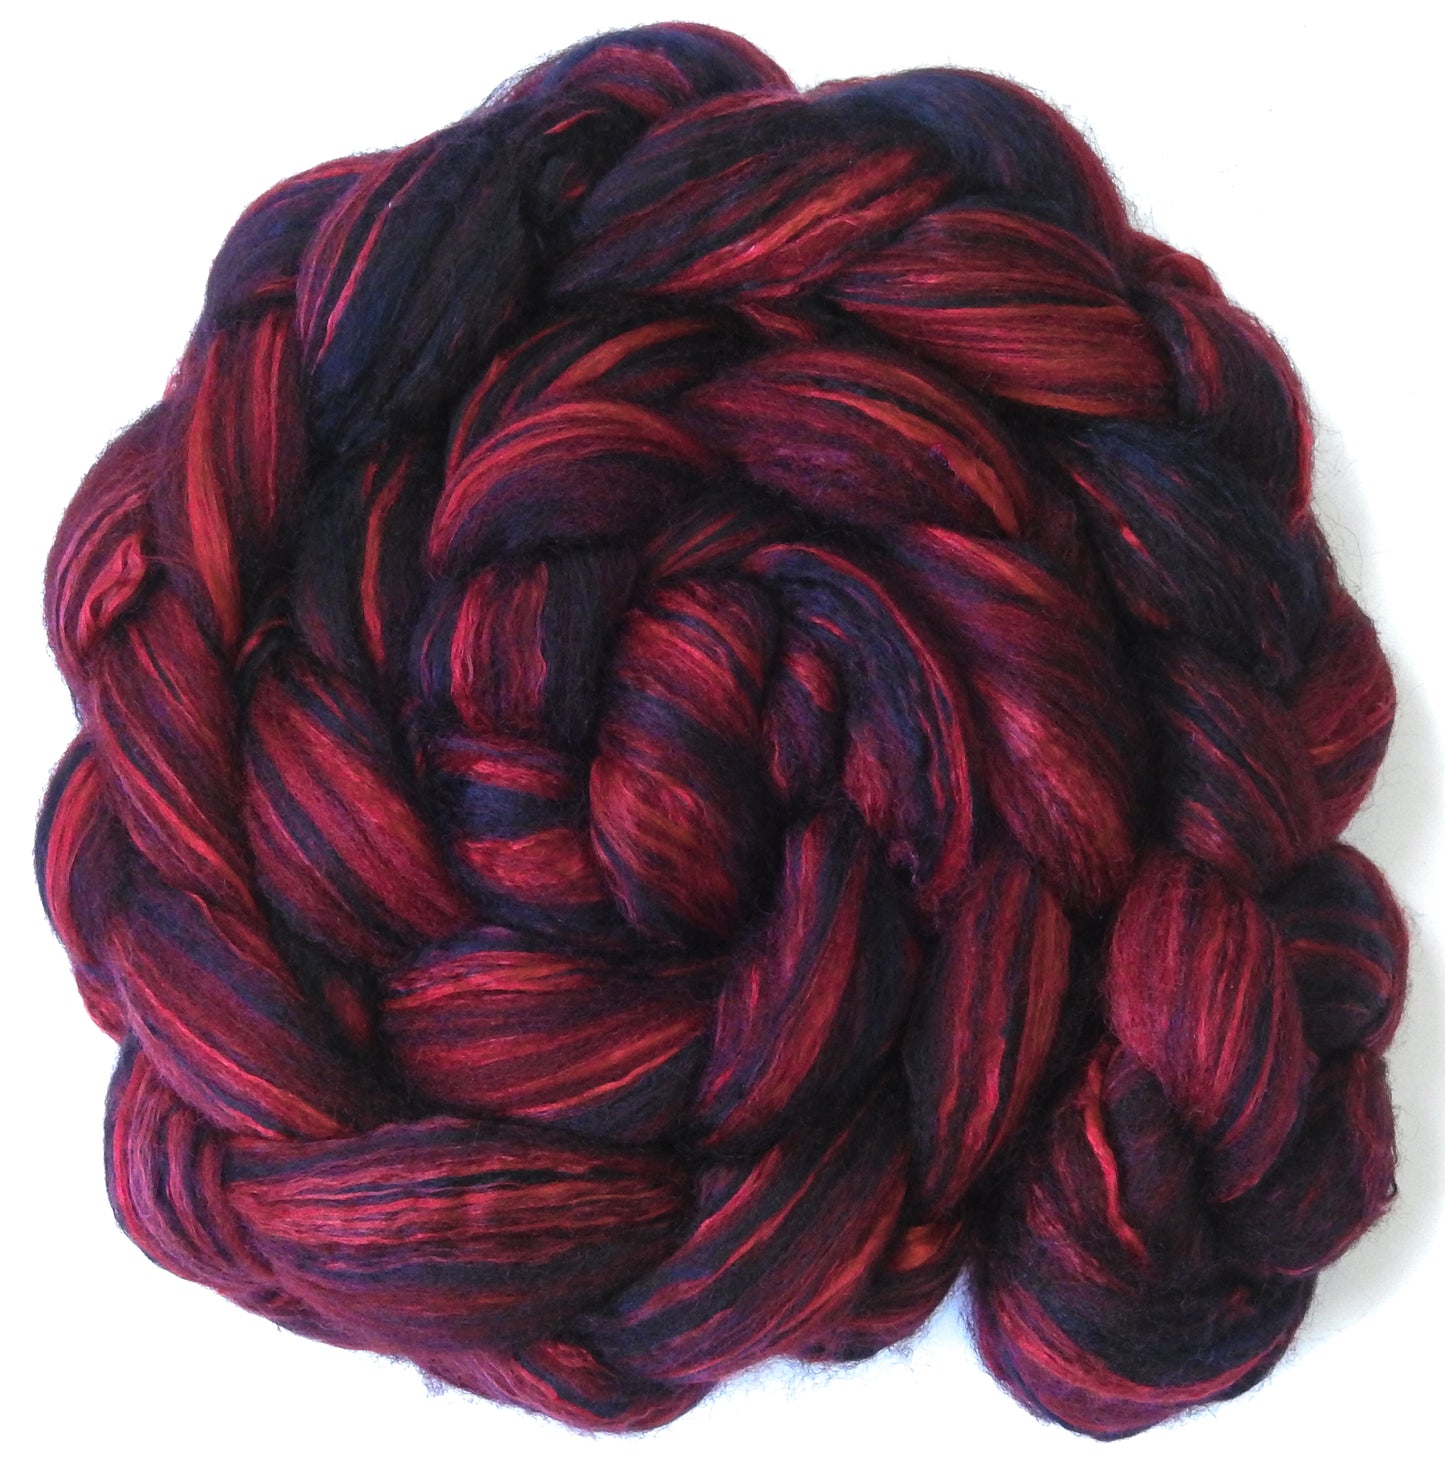 Crimson - Batt in a Braid #55- Shetland/ Mulberry Silk/ Black Bamboo (50/25/25)